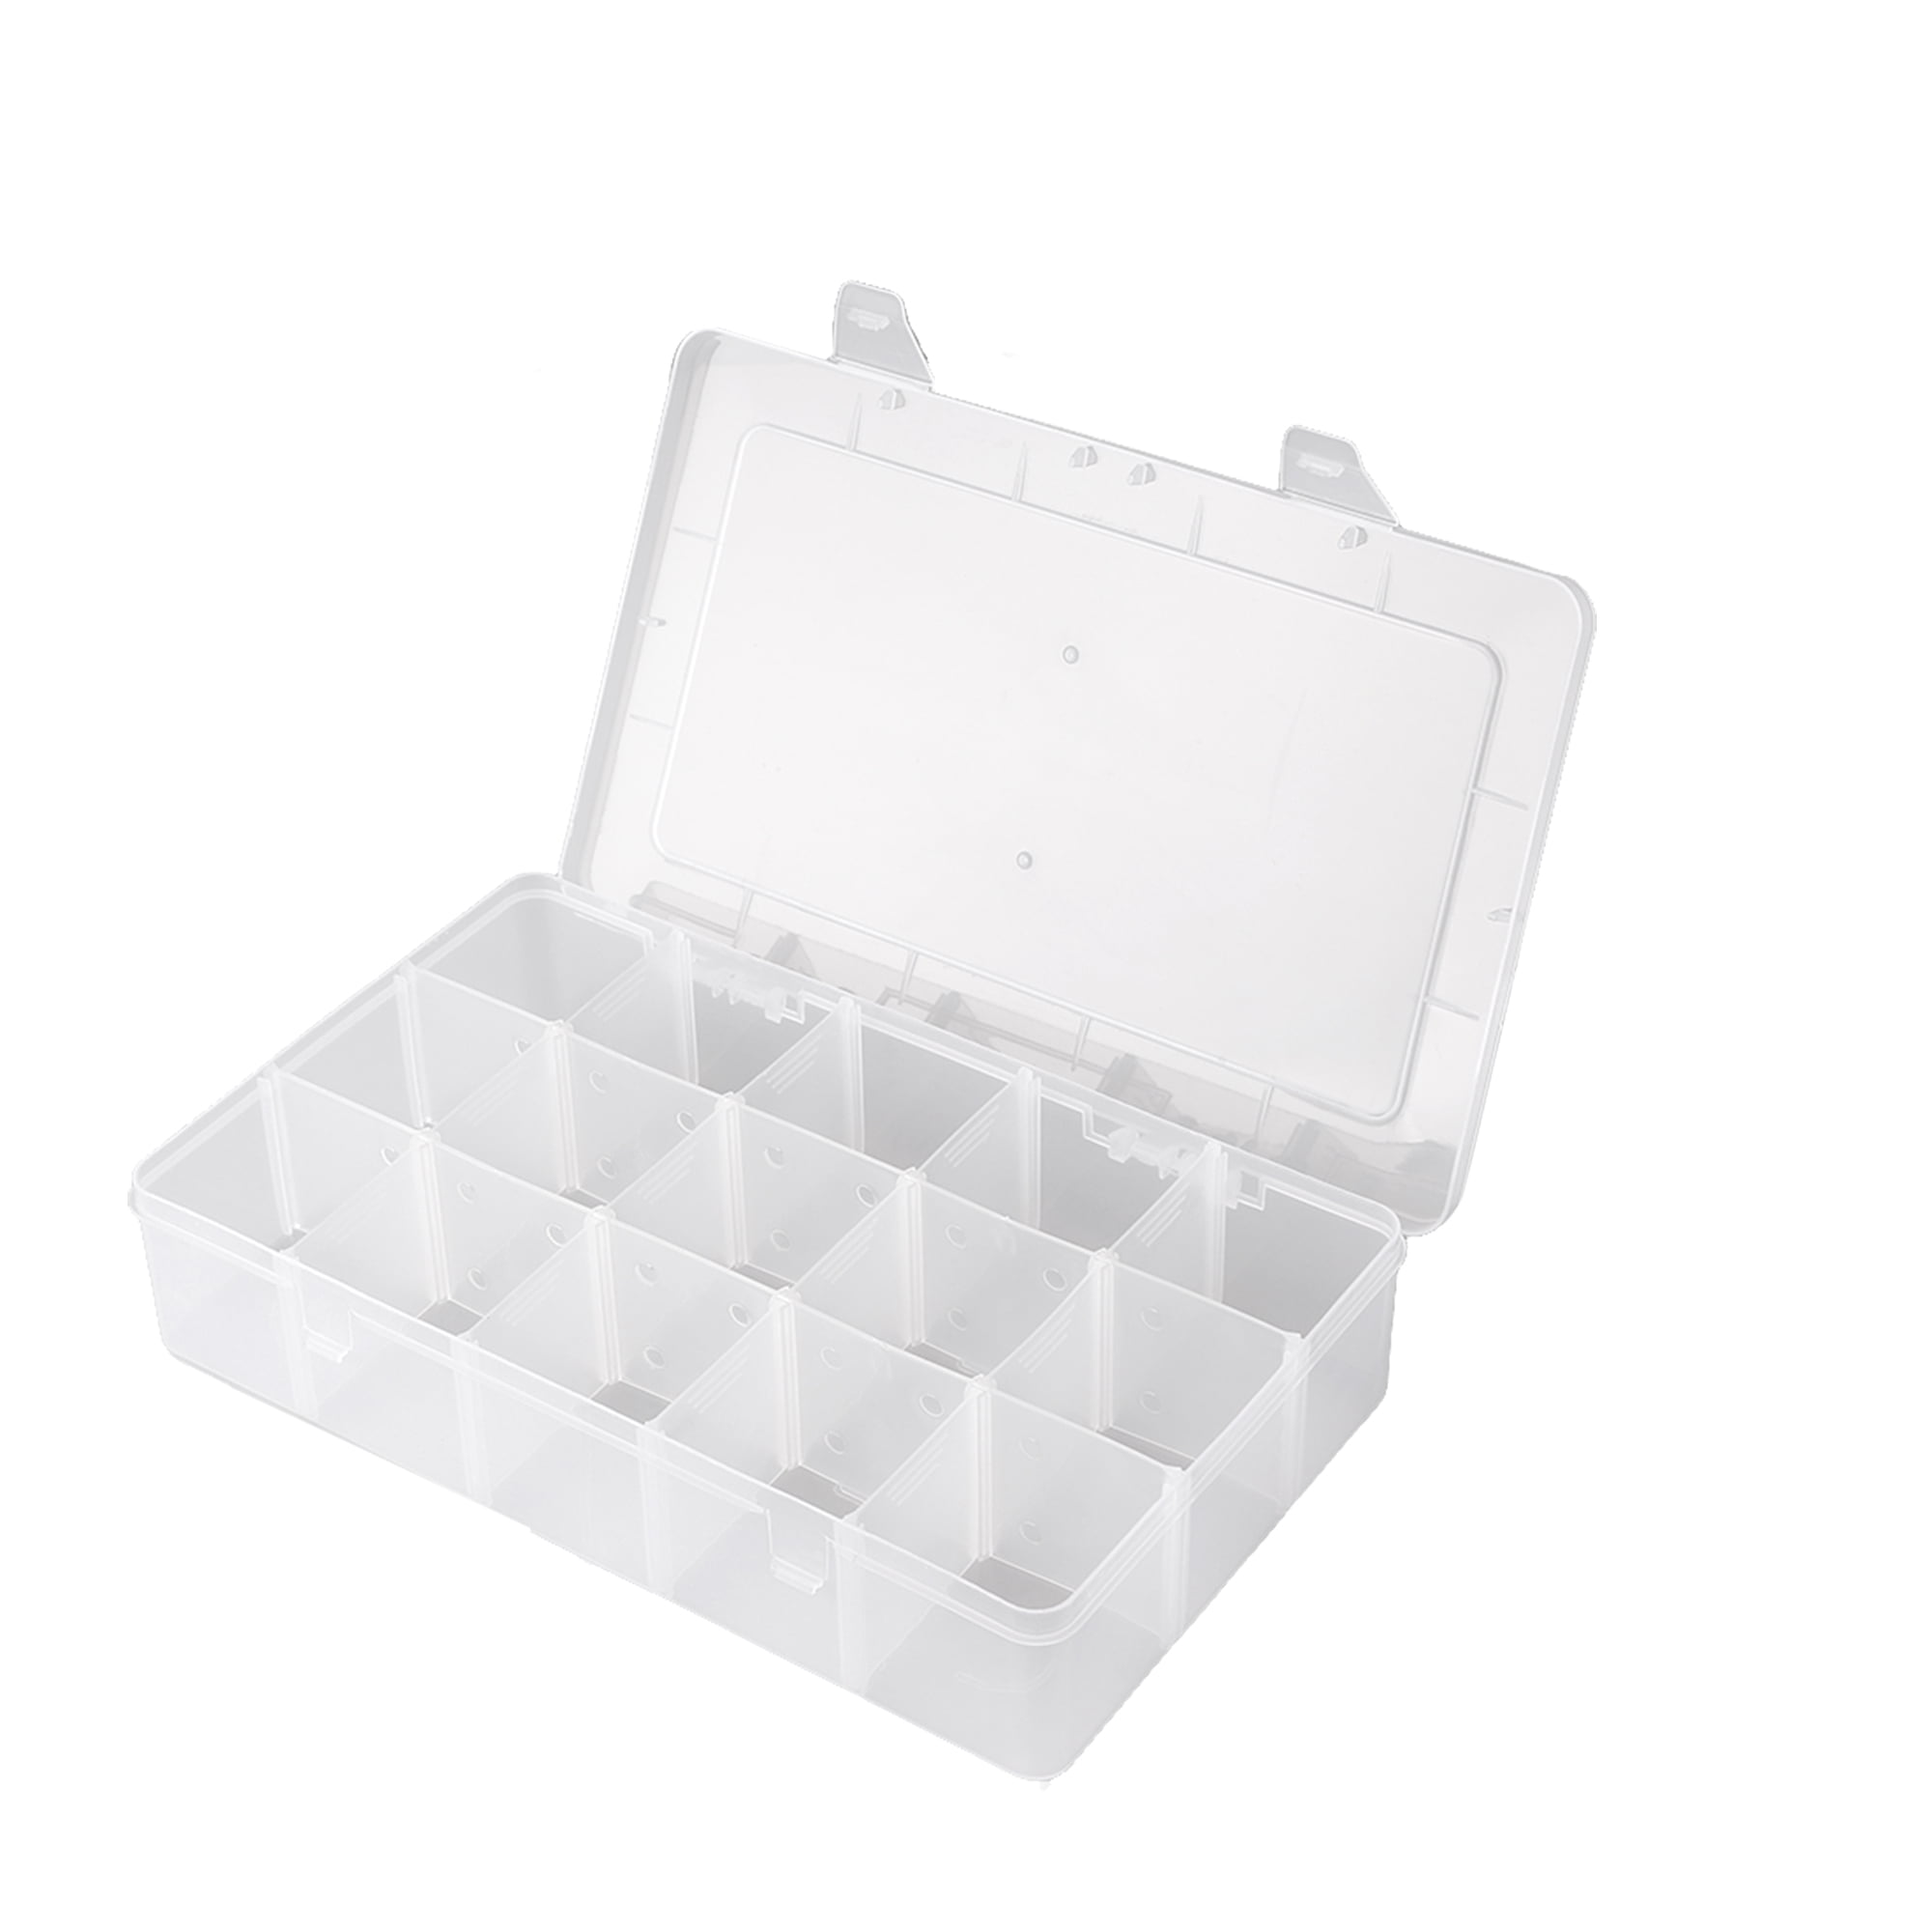 WOOXGEHM 15 Grids Plastic Clear Organizer Box with Adjustable